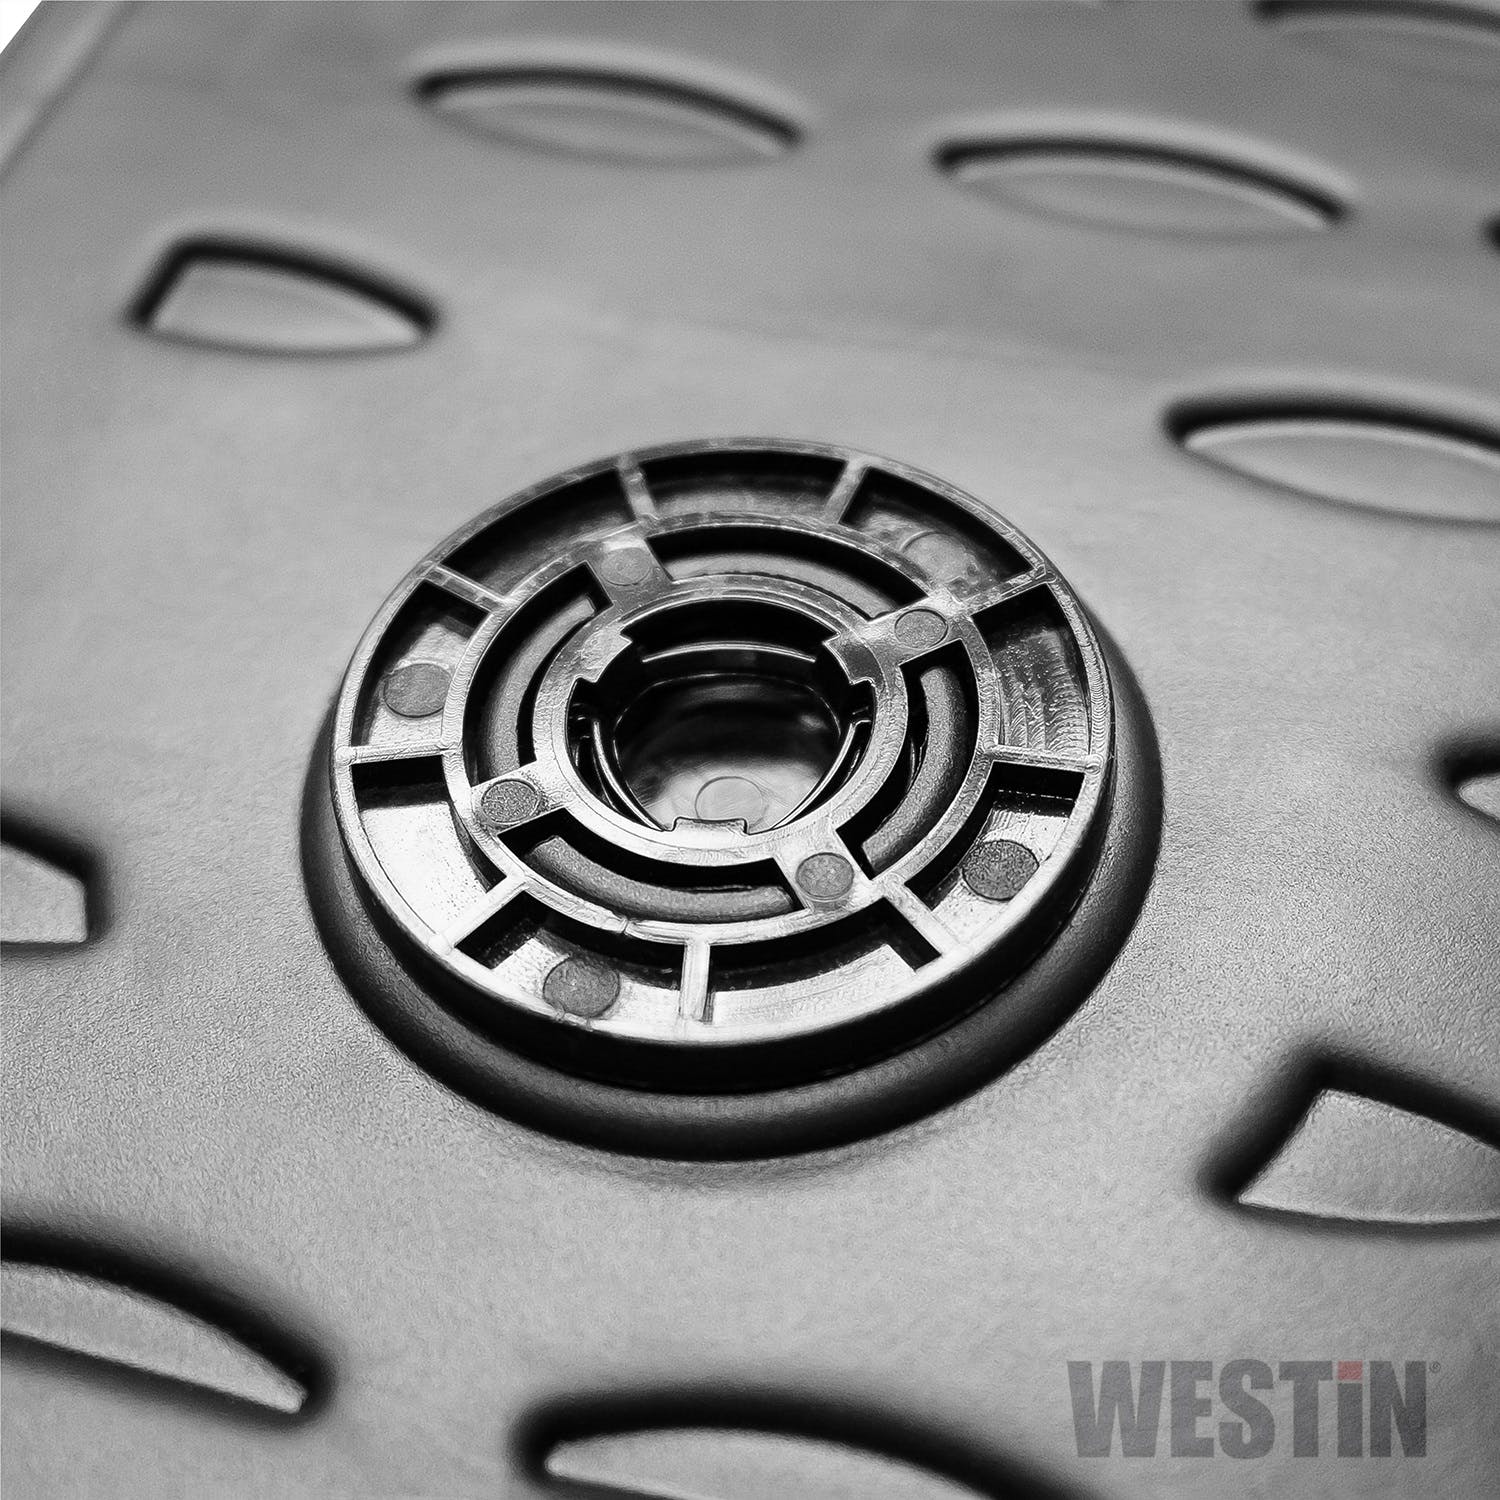 Westin Automotive 74-40-21004 Profile Floor Liners Front Row Black